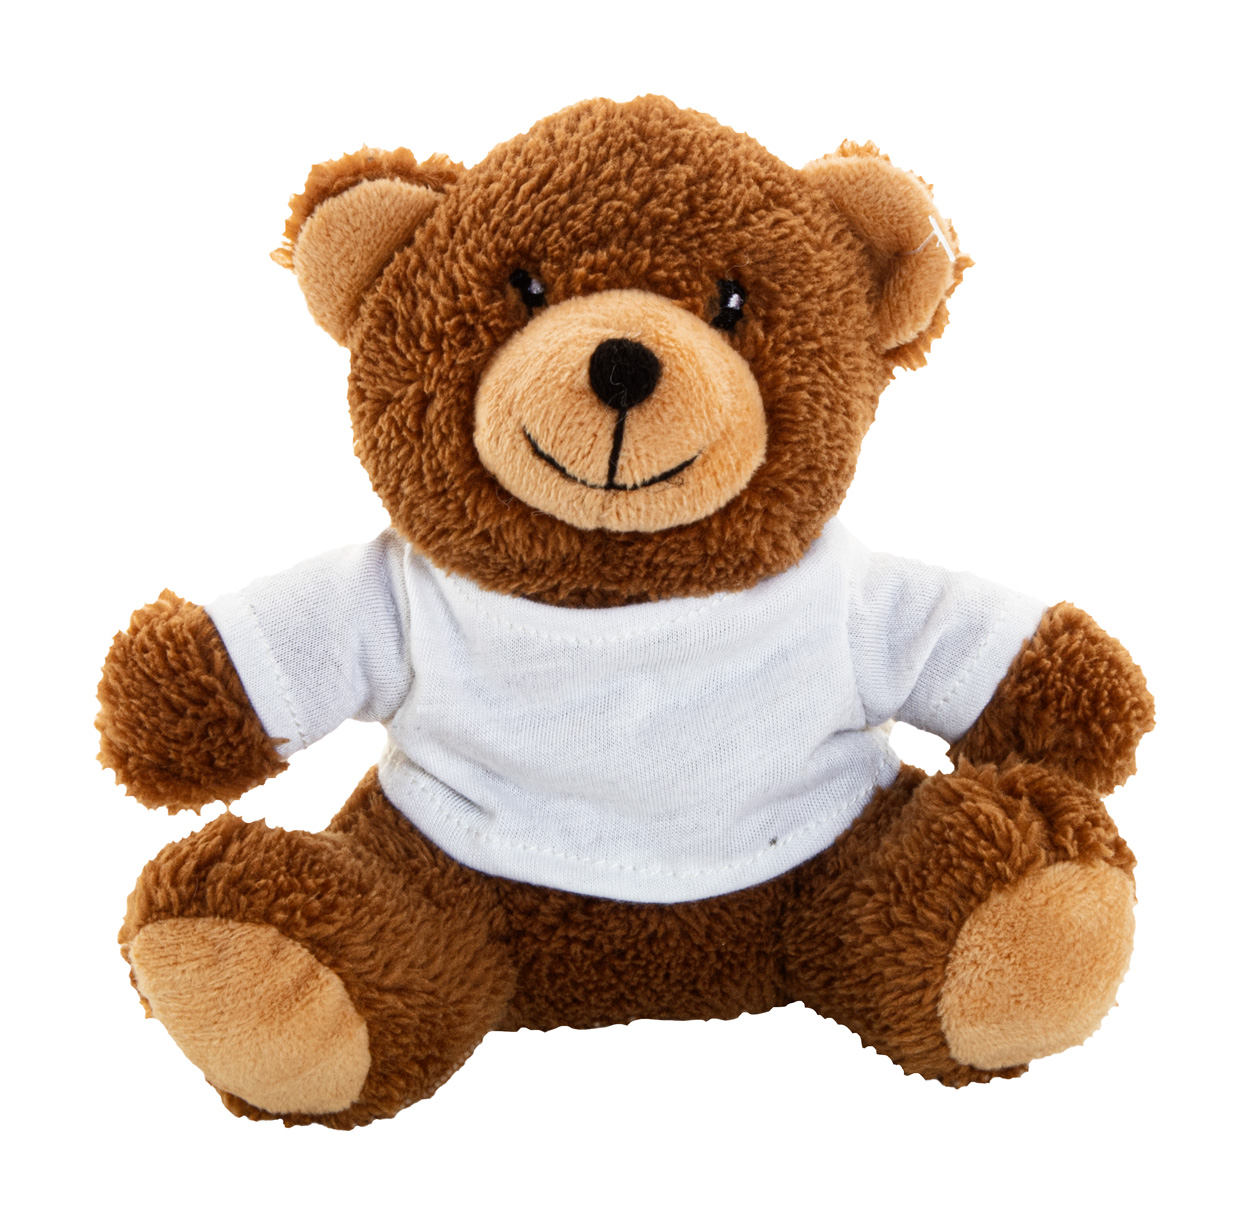 Rebear RPET teddy bear - brown